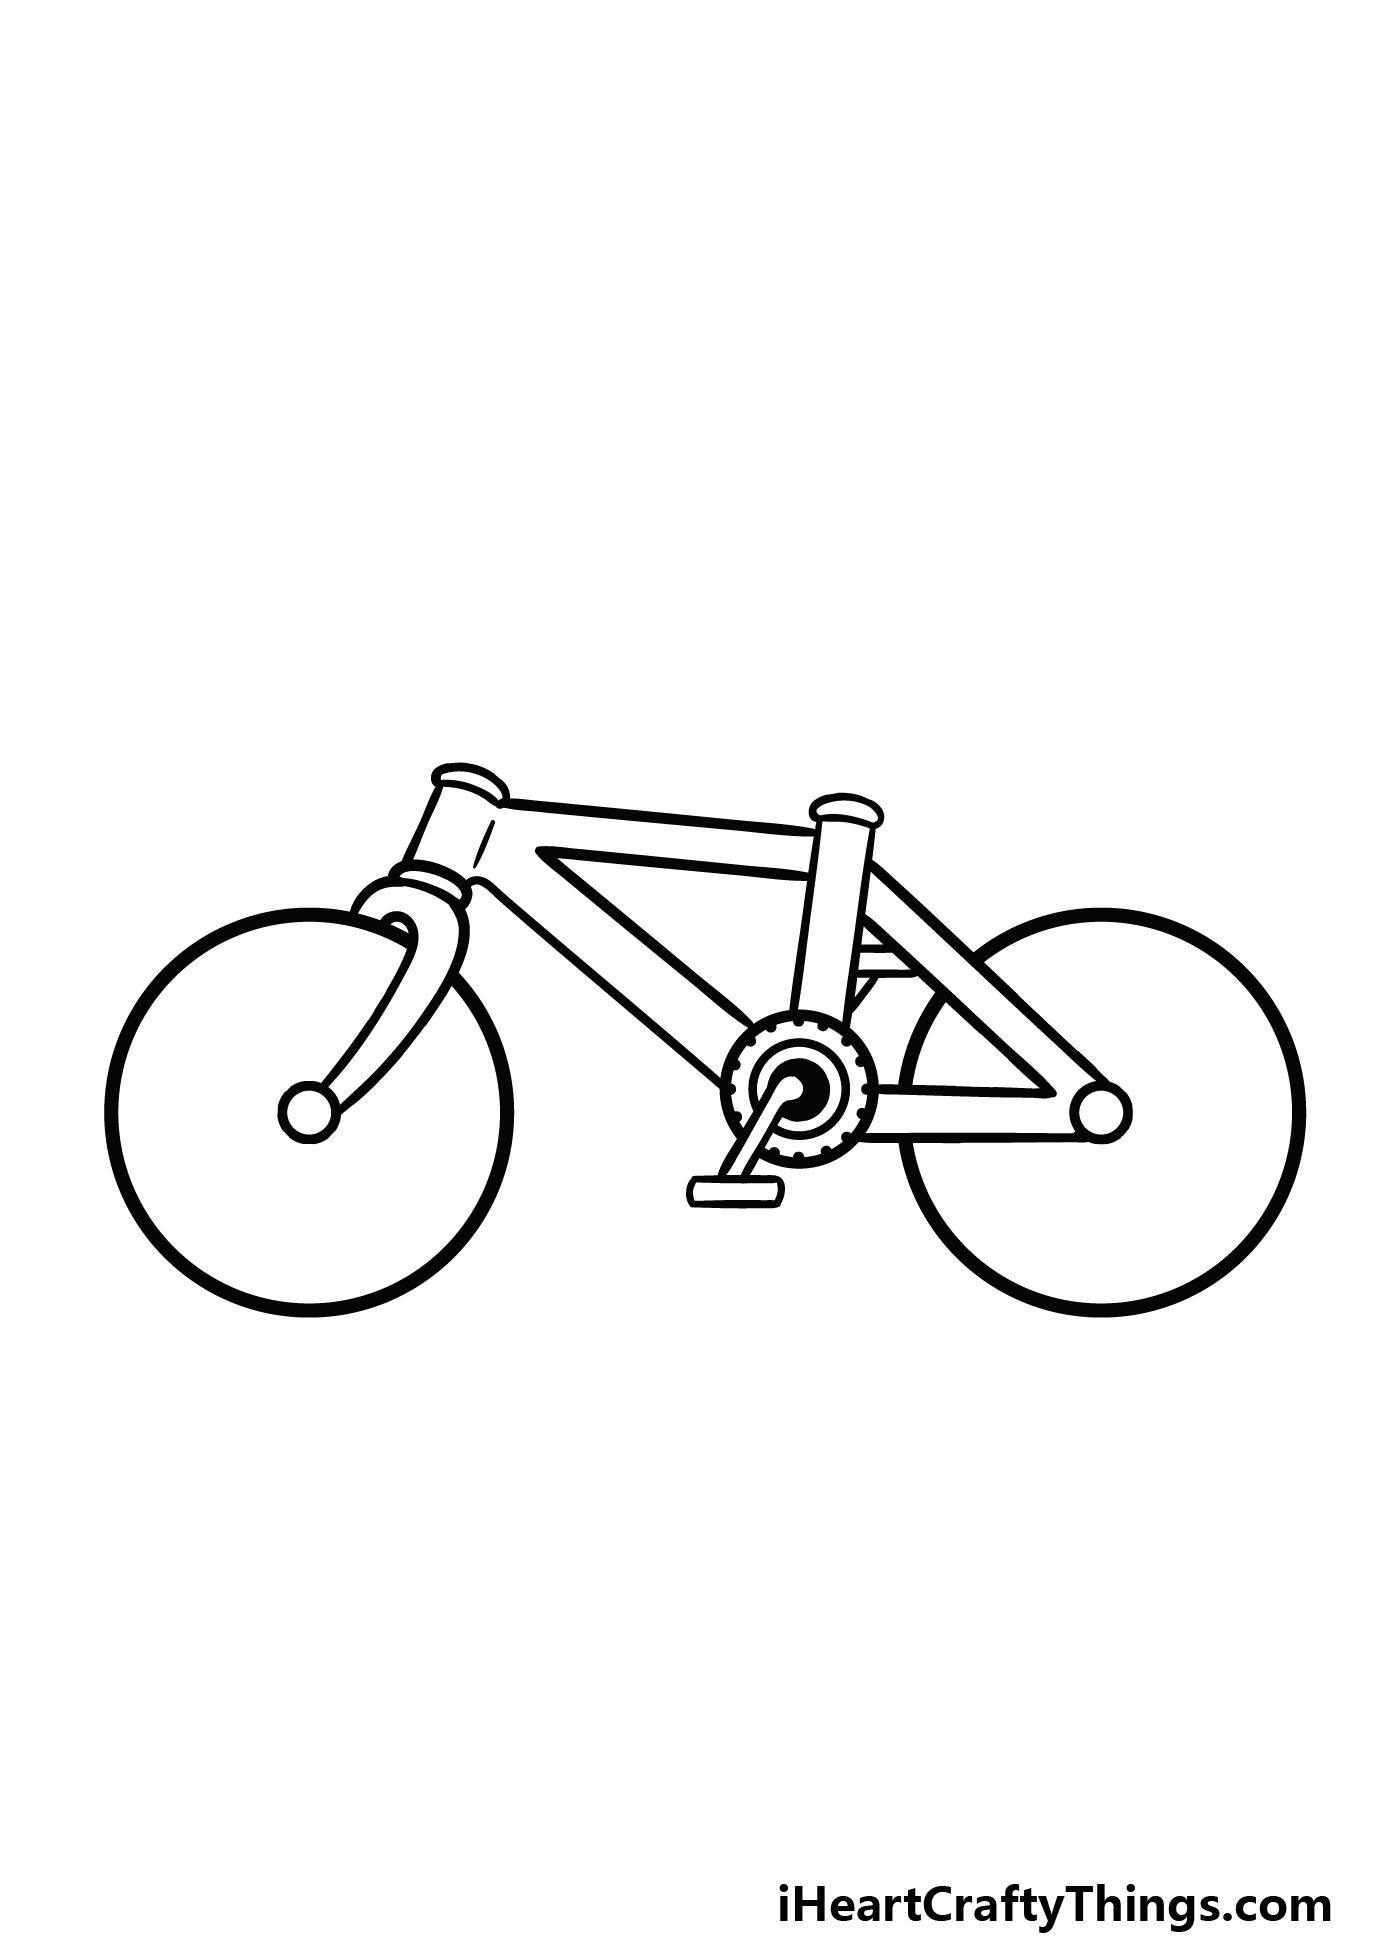 how to draw a cartoon bike step 3